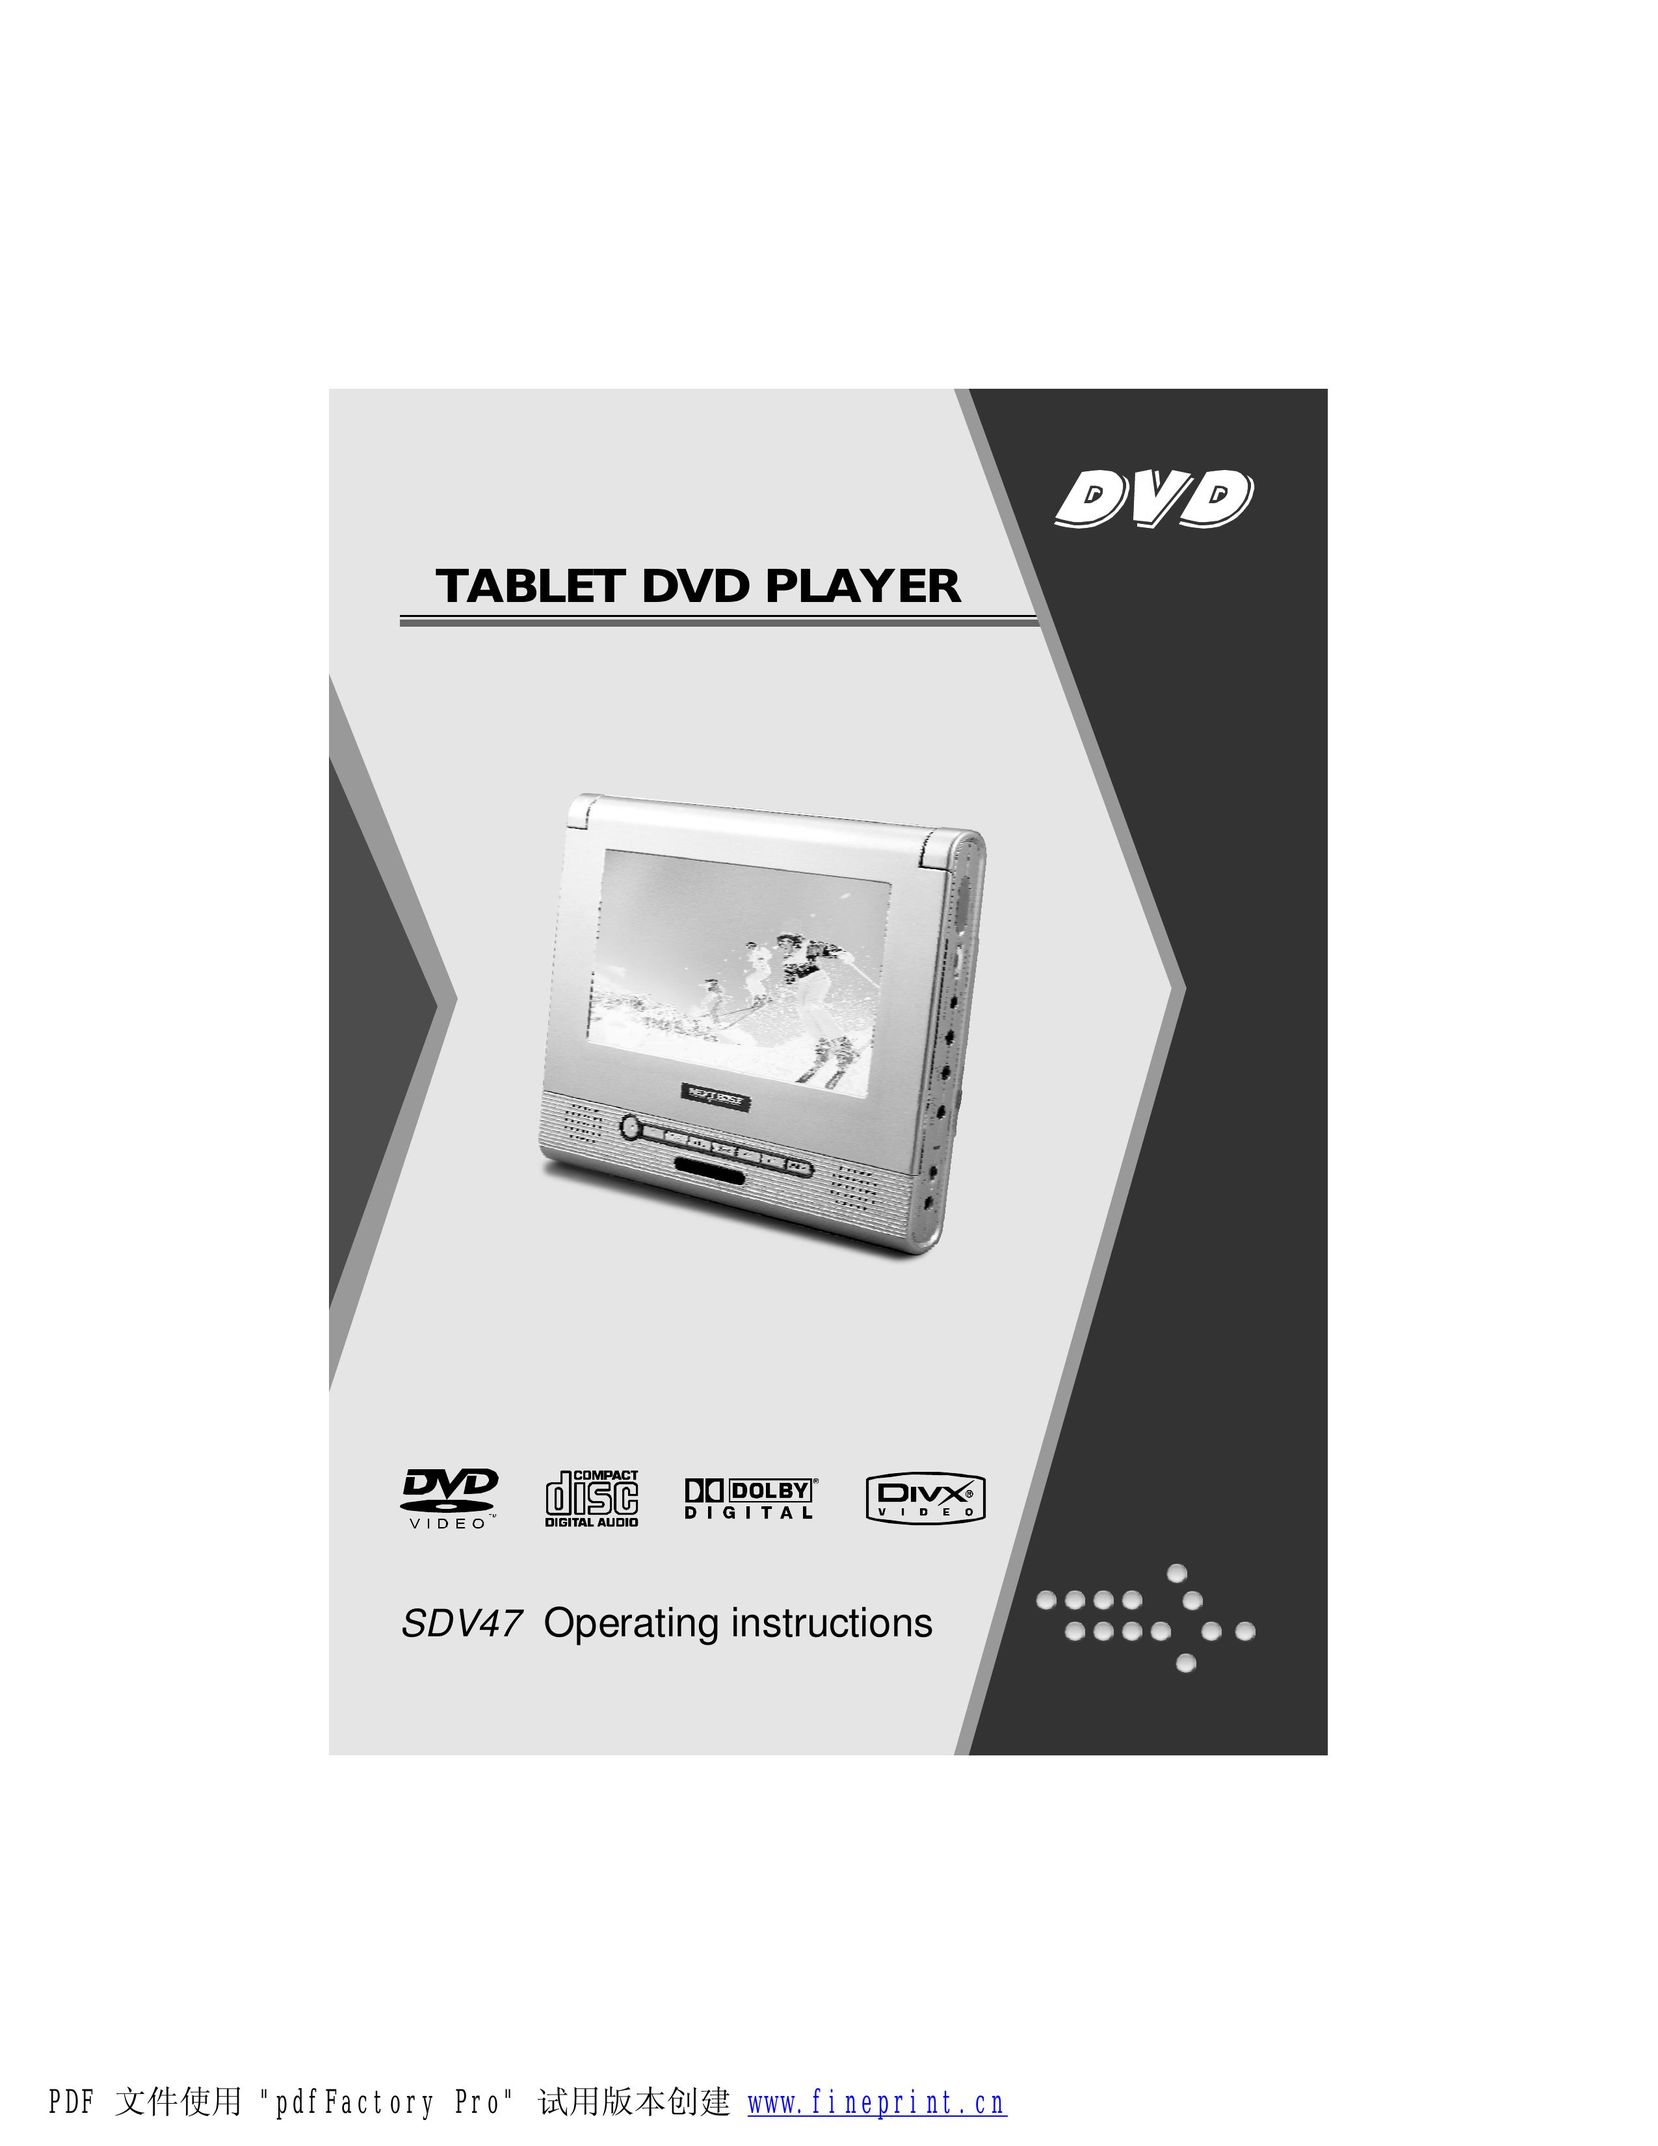 NextBase SDV47 Portable DVD Player User Manual